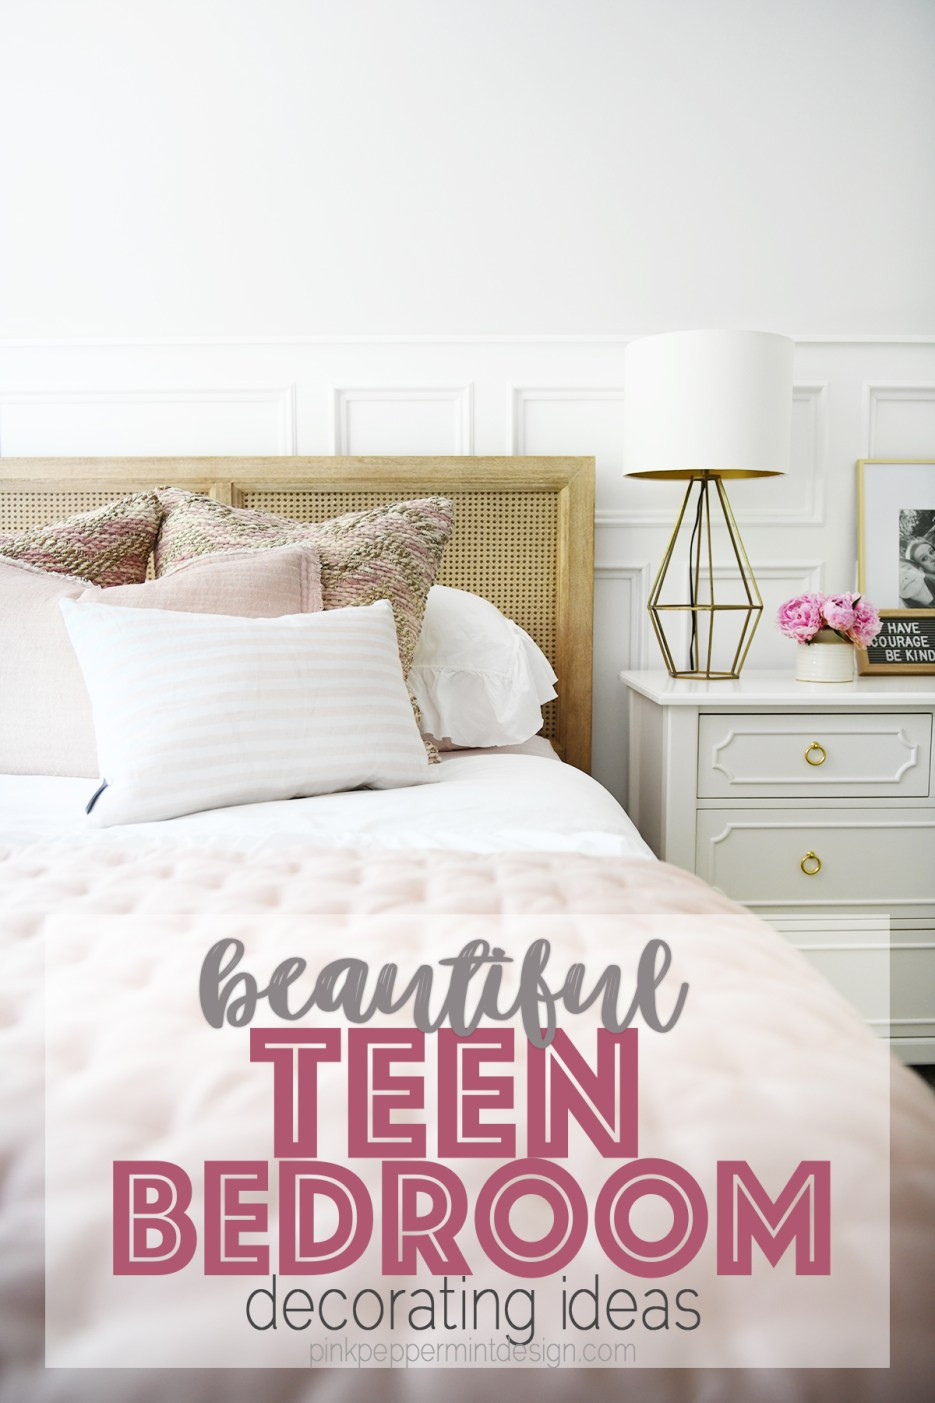 Girl Teenagers Bedroom Ideas
 Cute Room Ideas for a Teenage Girl Teen Bedroom Before